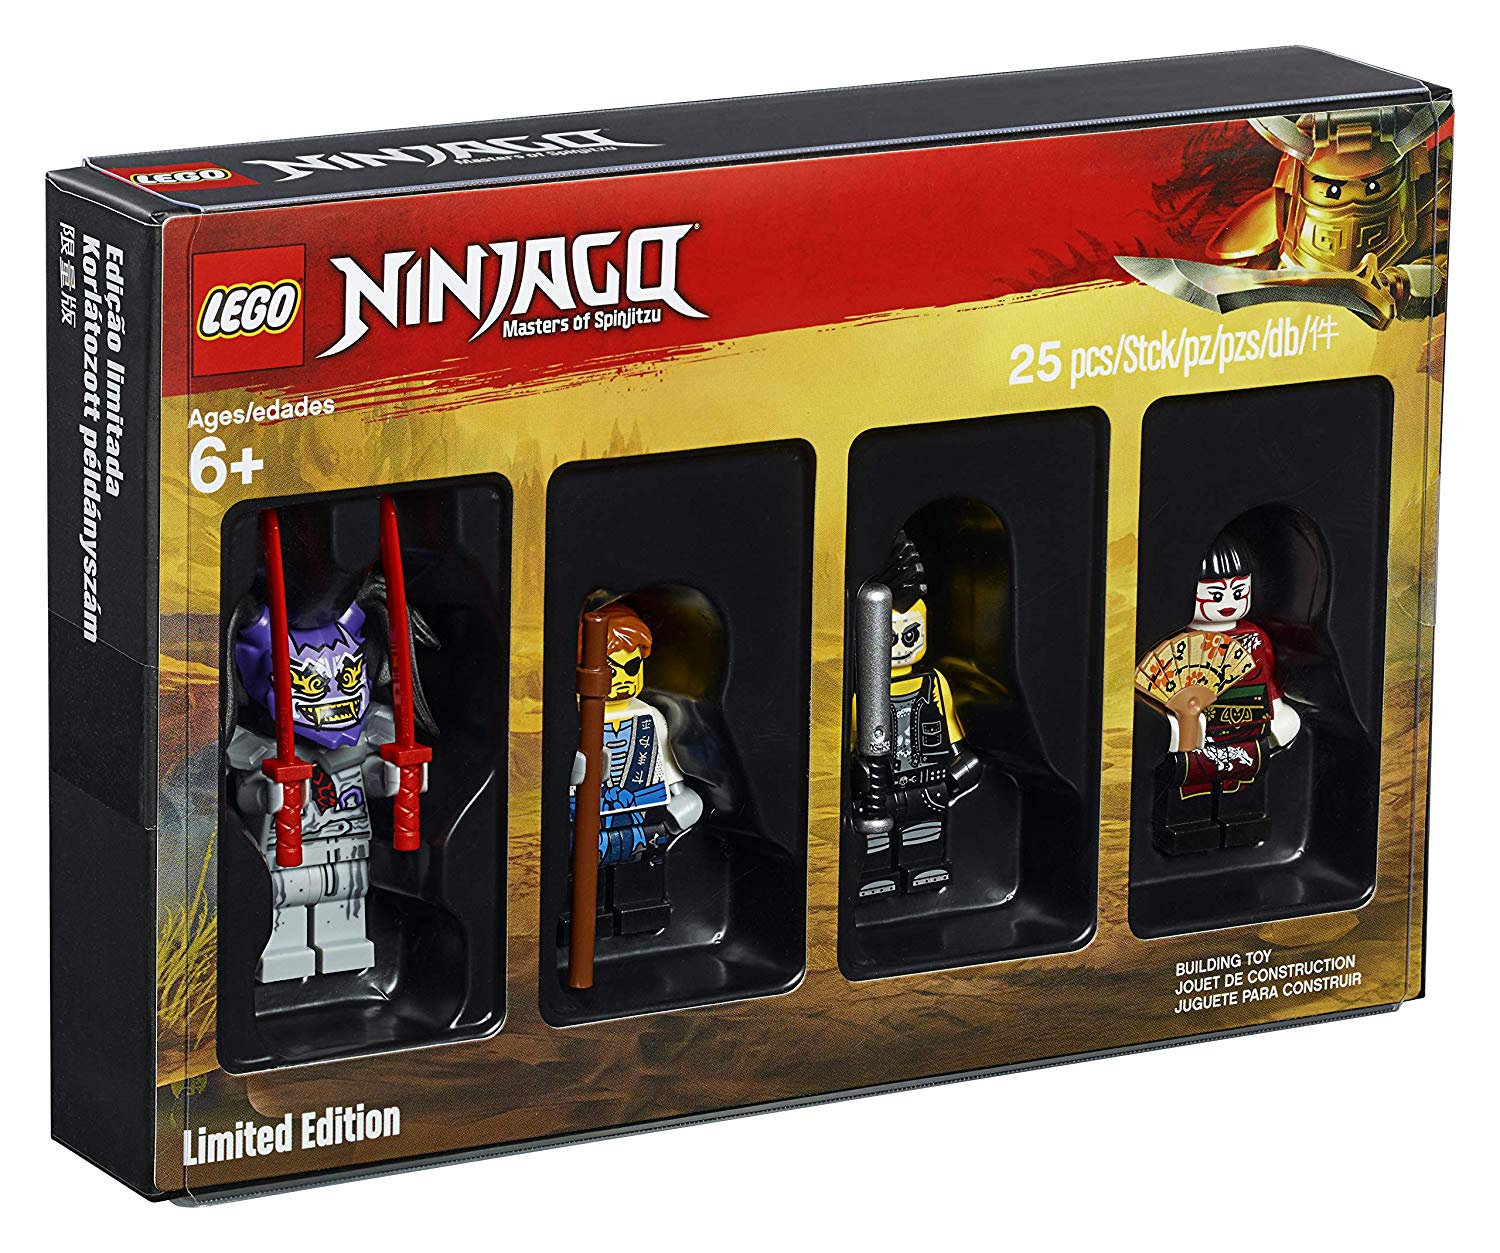 Famous Lego Bricktober 2018 - 5005257 - Ninjago Masters Of Spinjitzu Exclus